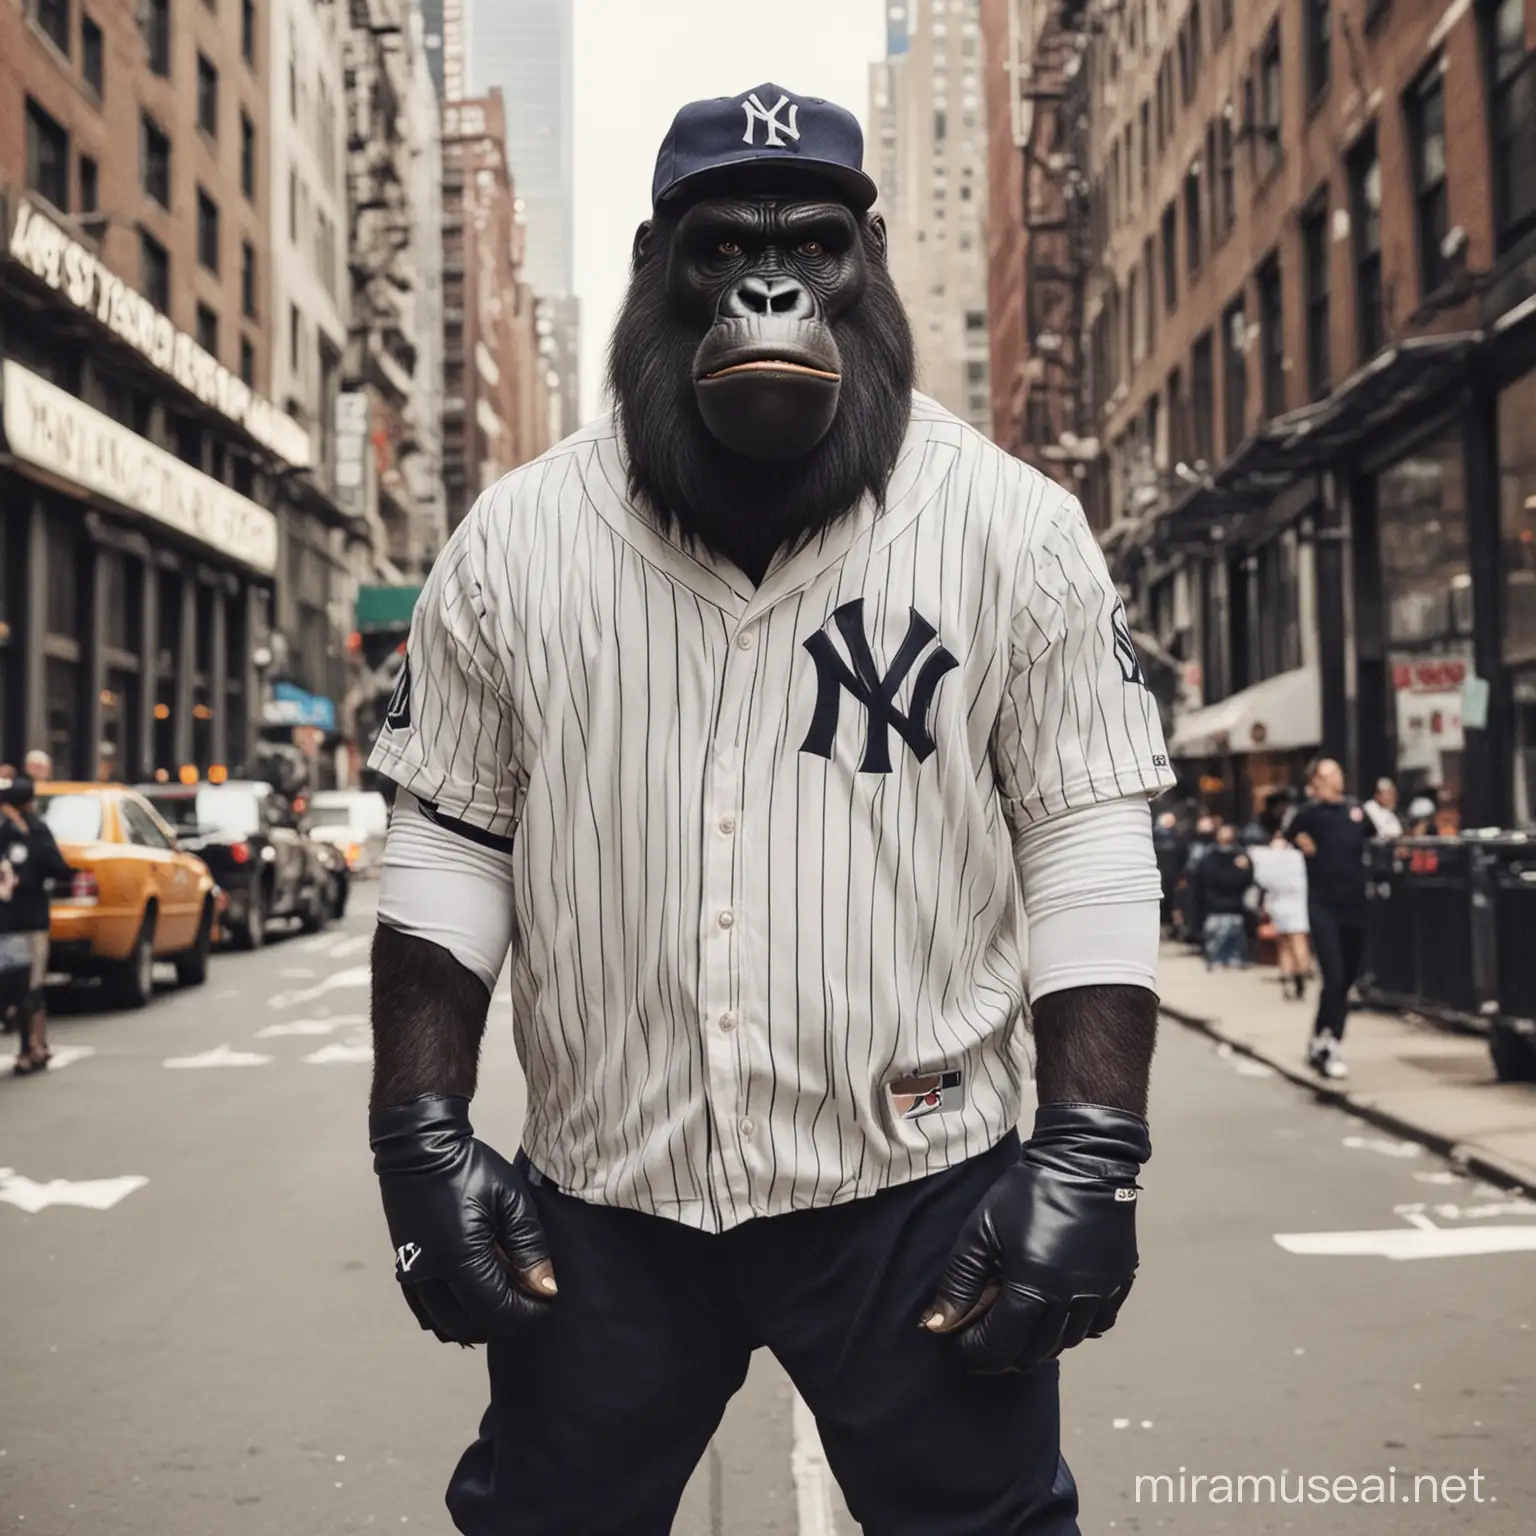 King Kong Wearing New York Yankees Baseball Uniform in New York City